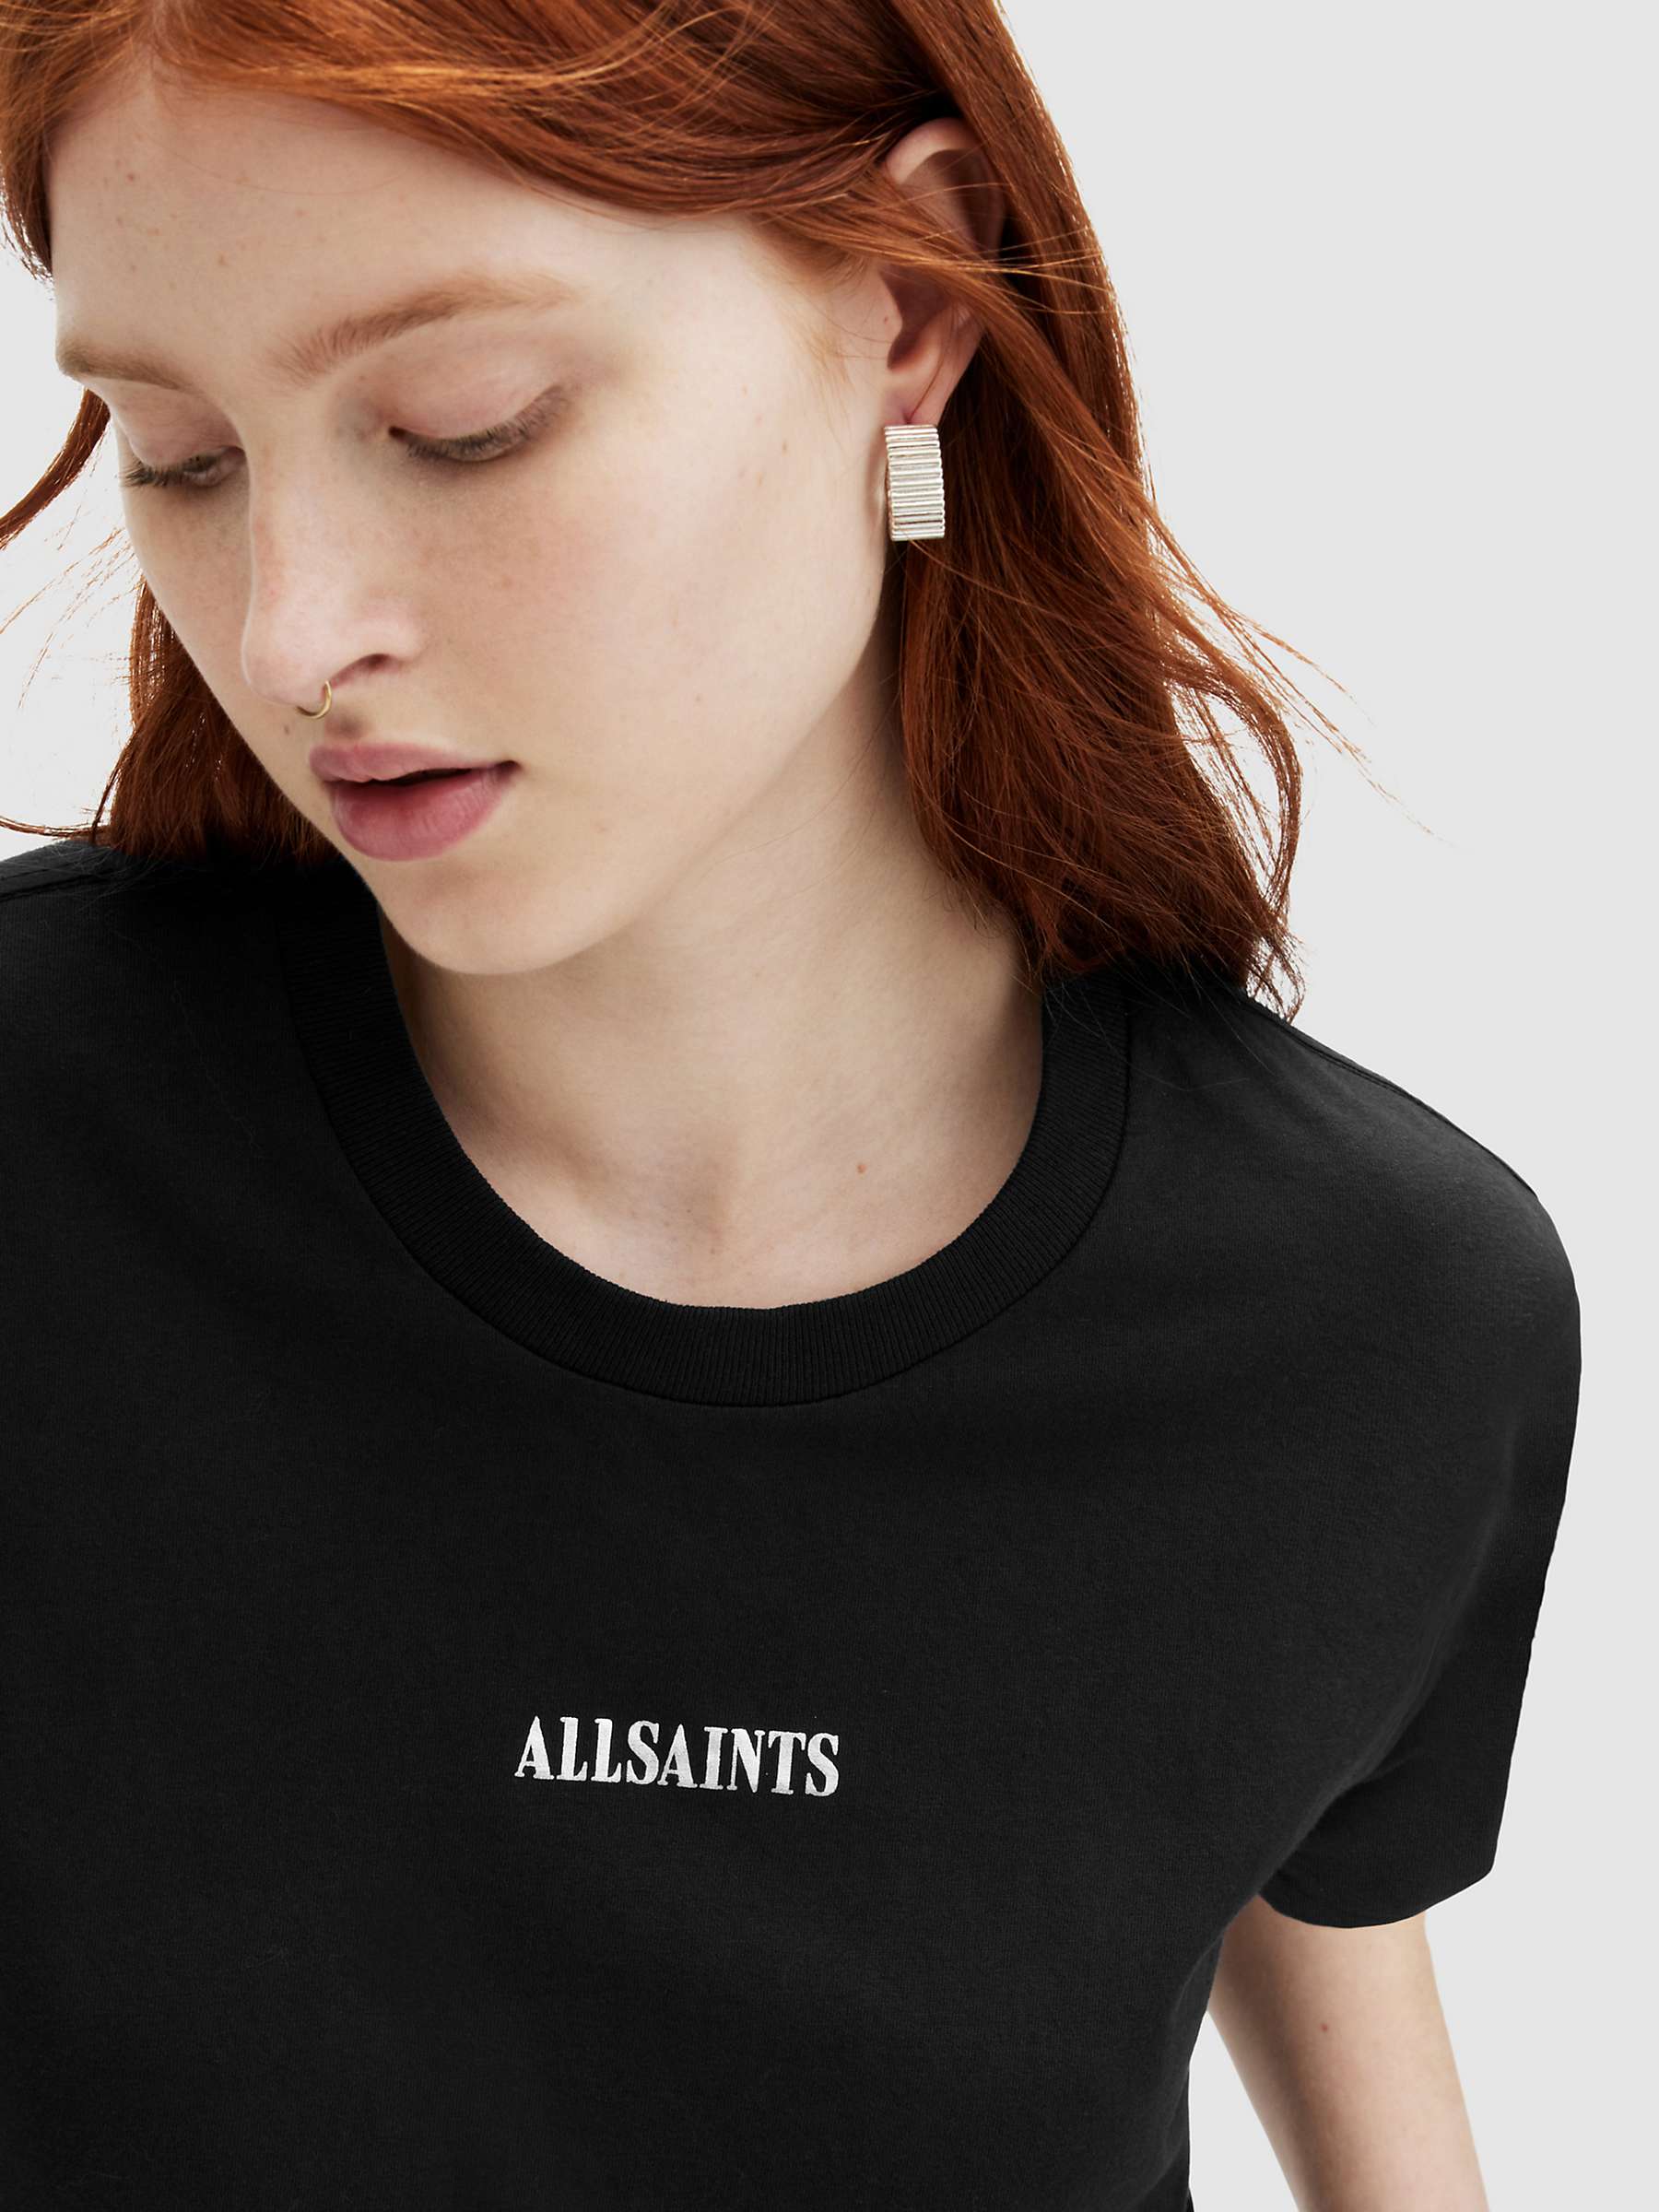 Buy AllSaints Fortuna Organic Cotton T-shirt, Black/White Online at johnlewis.com